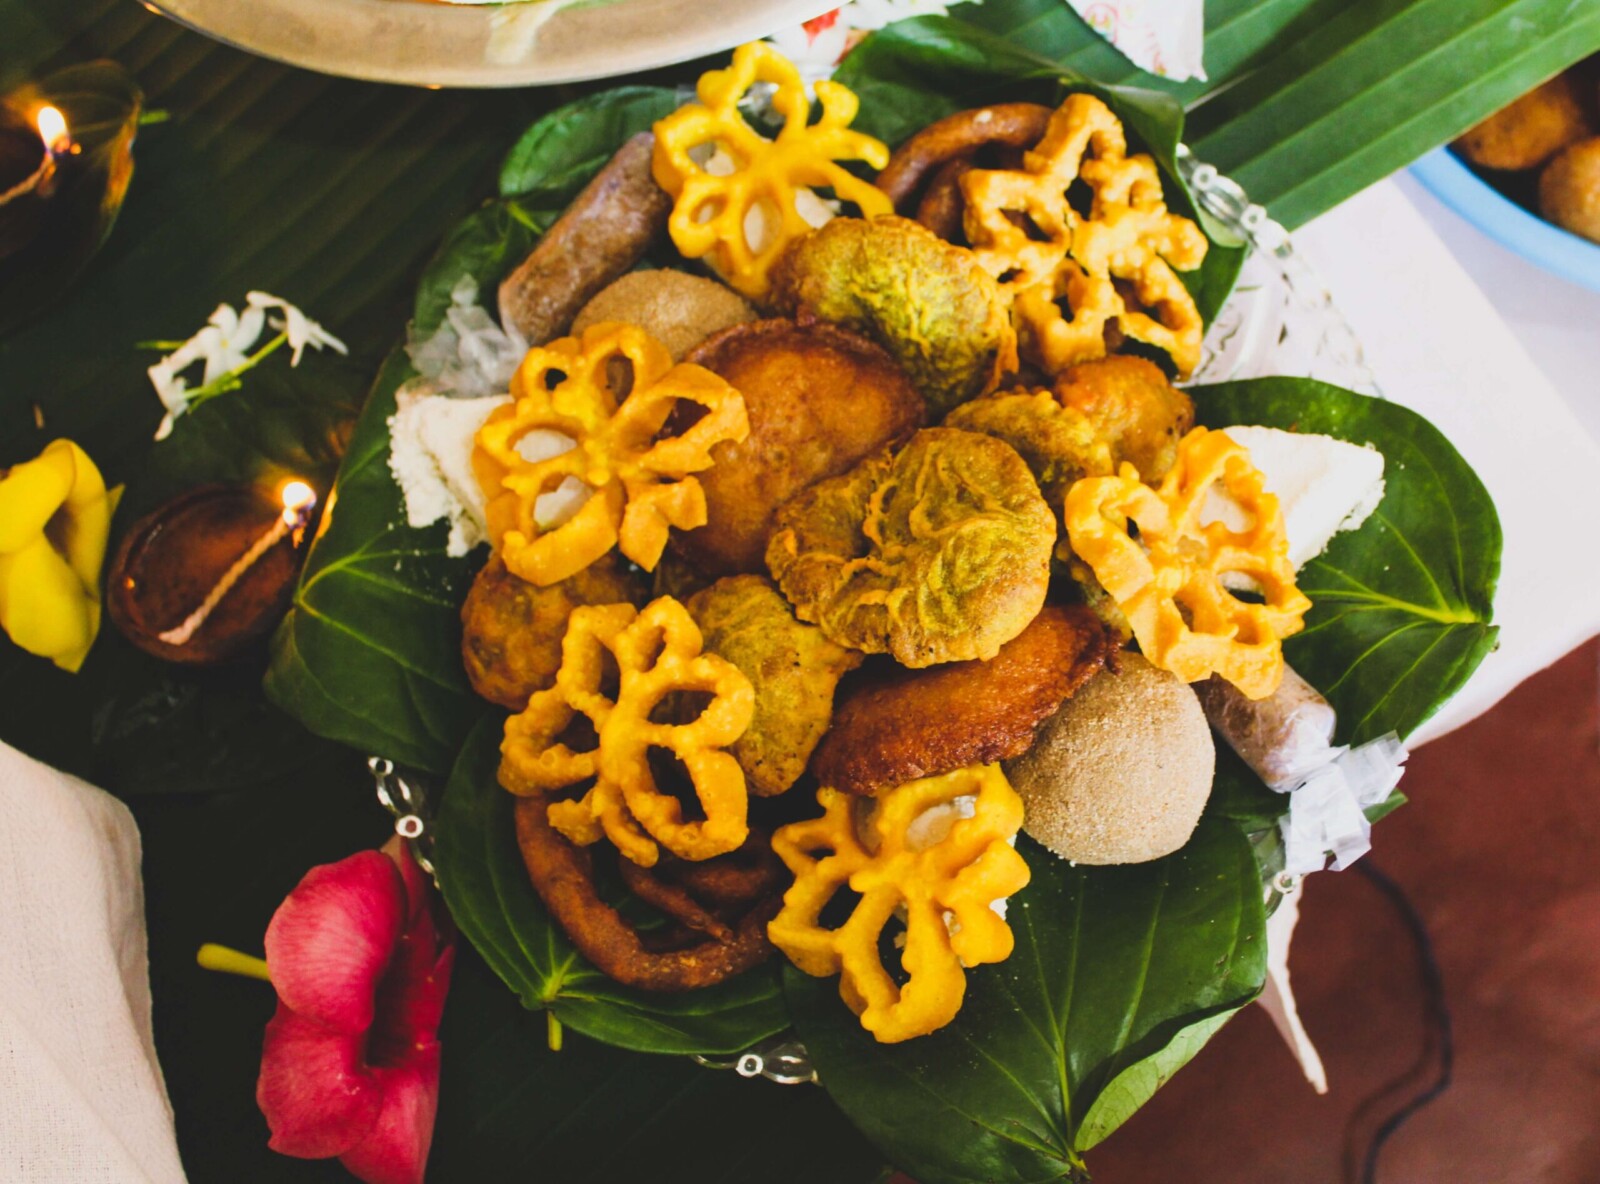 Sinhala and Tamil New Year in Sri Lanka